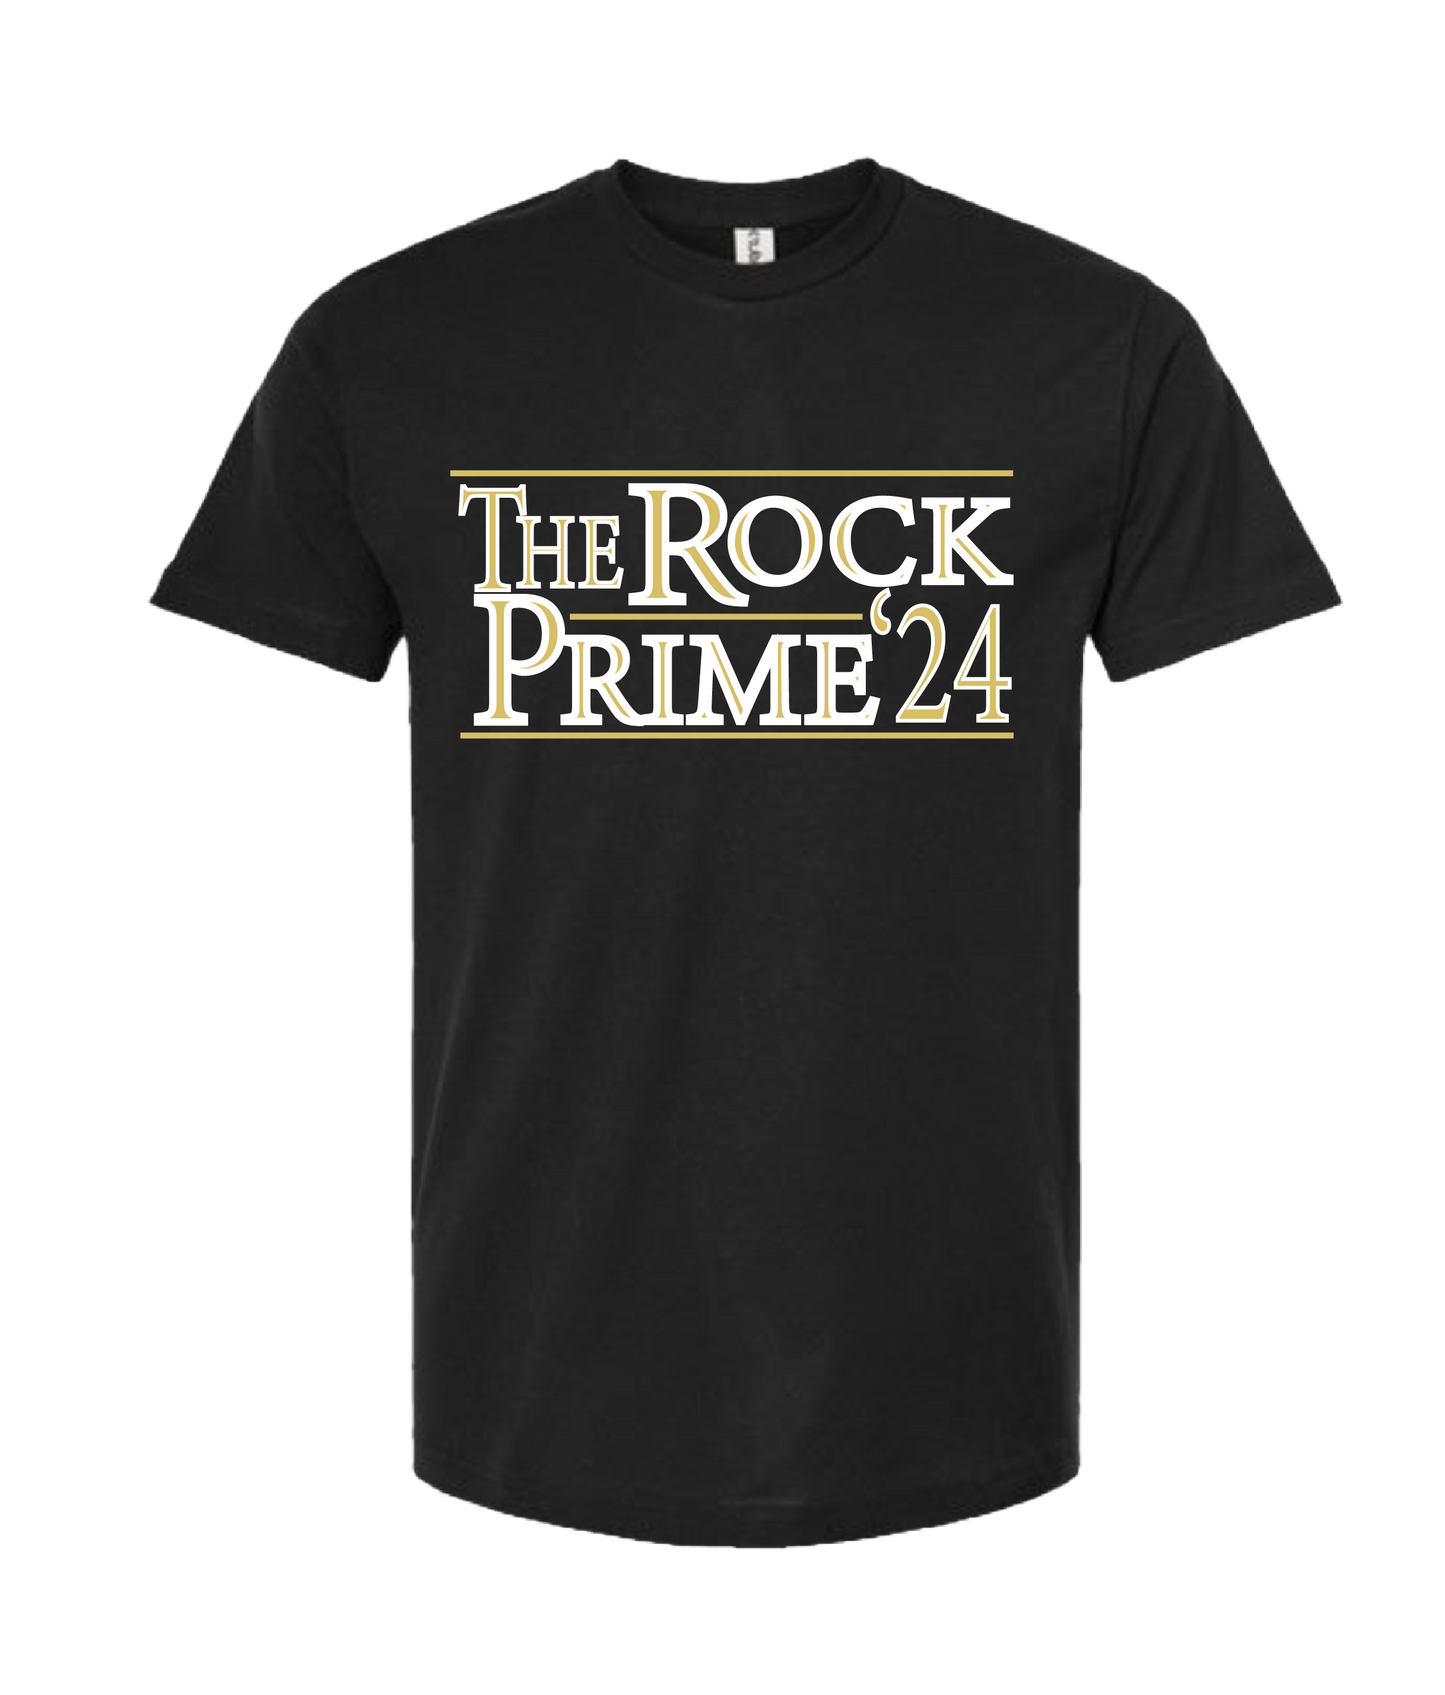 The Rock/Prime '24